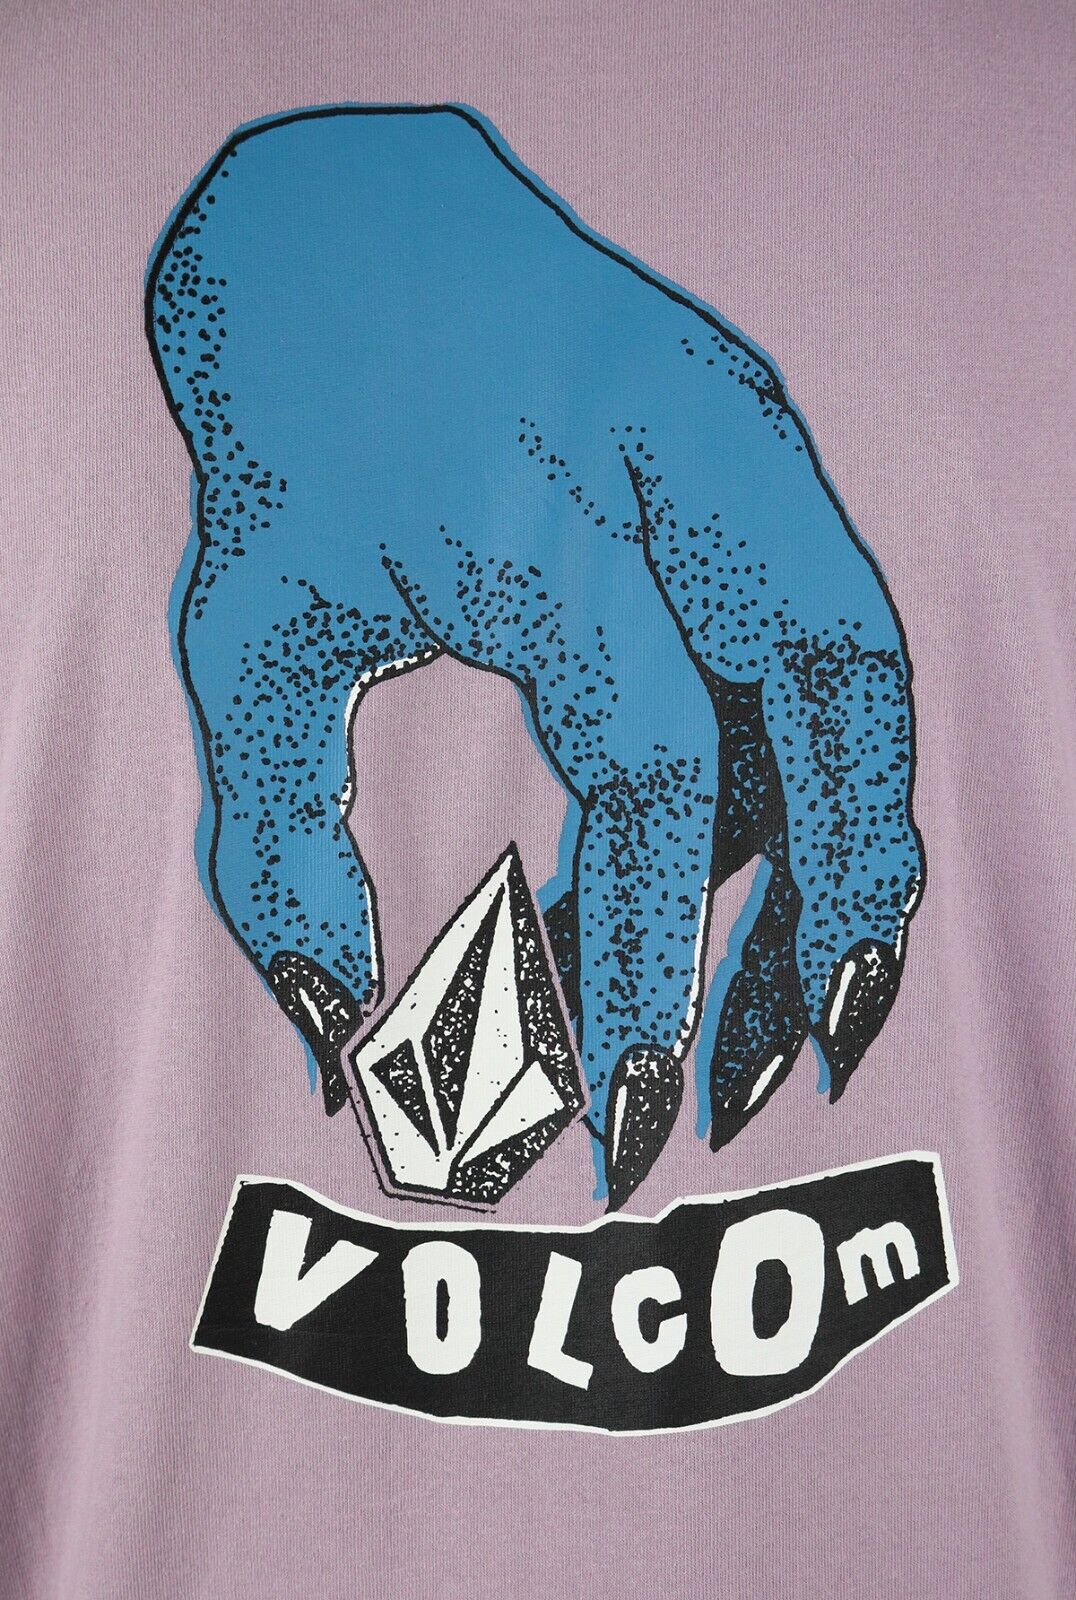 Volcom Men's Purple Stone Blue Hand L/S T-Shirt (584)